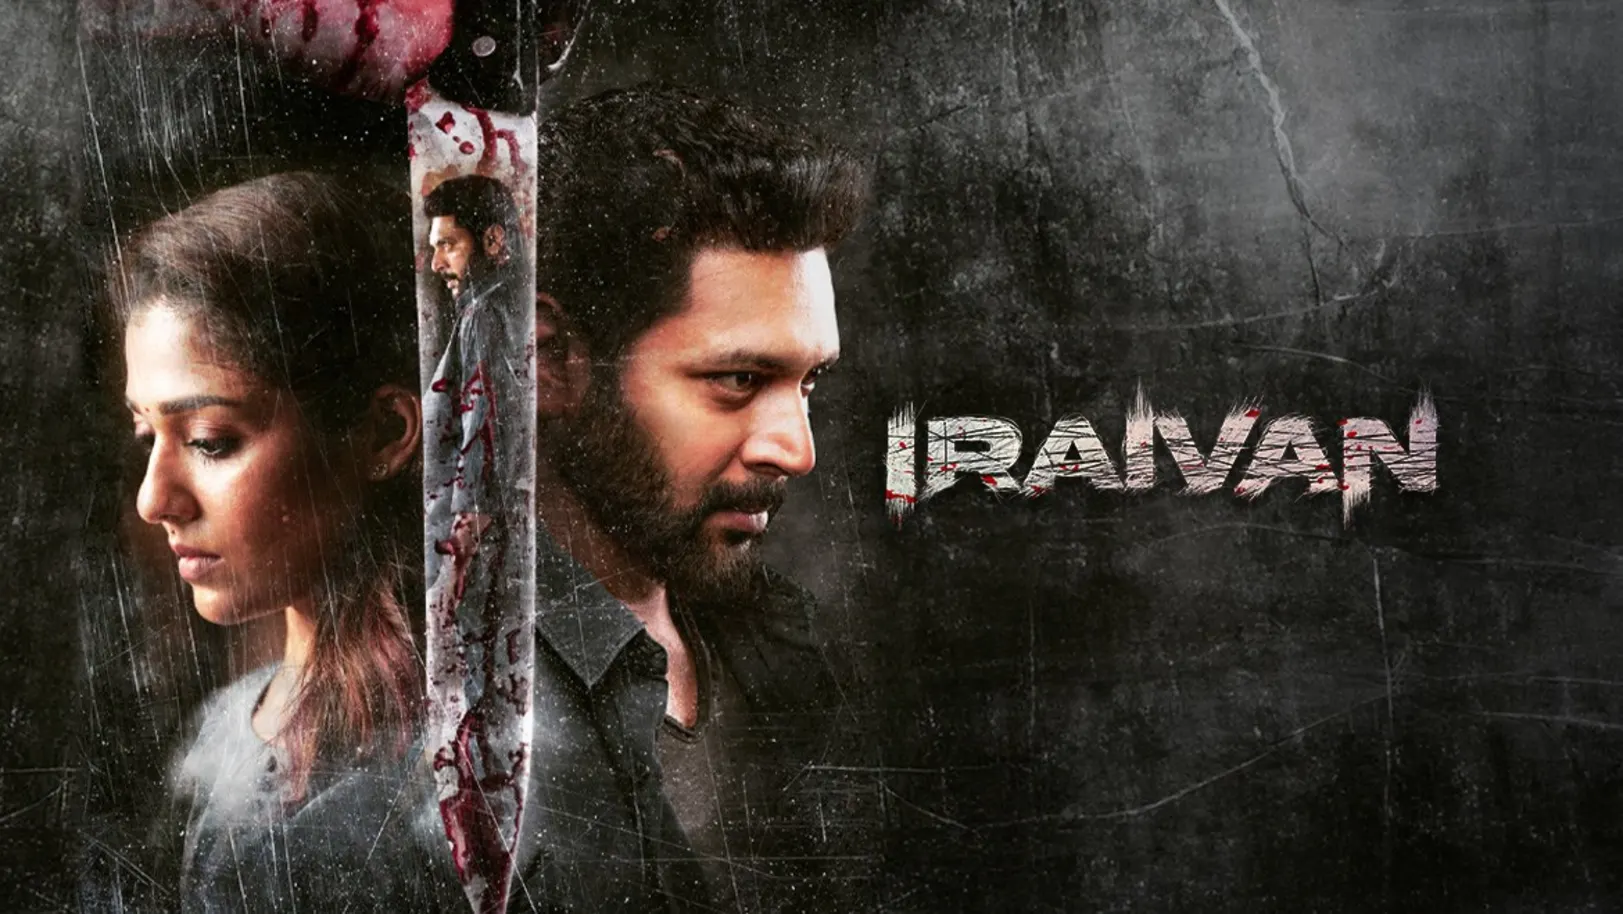 Iraivan Movie